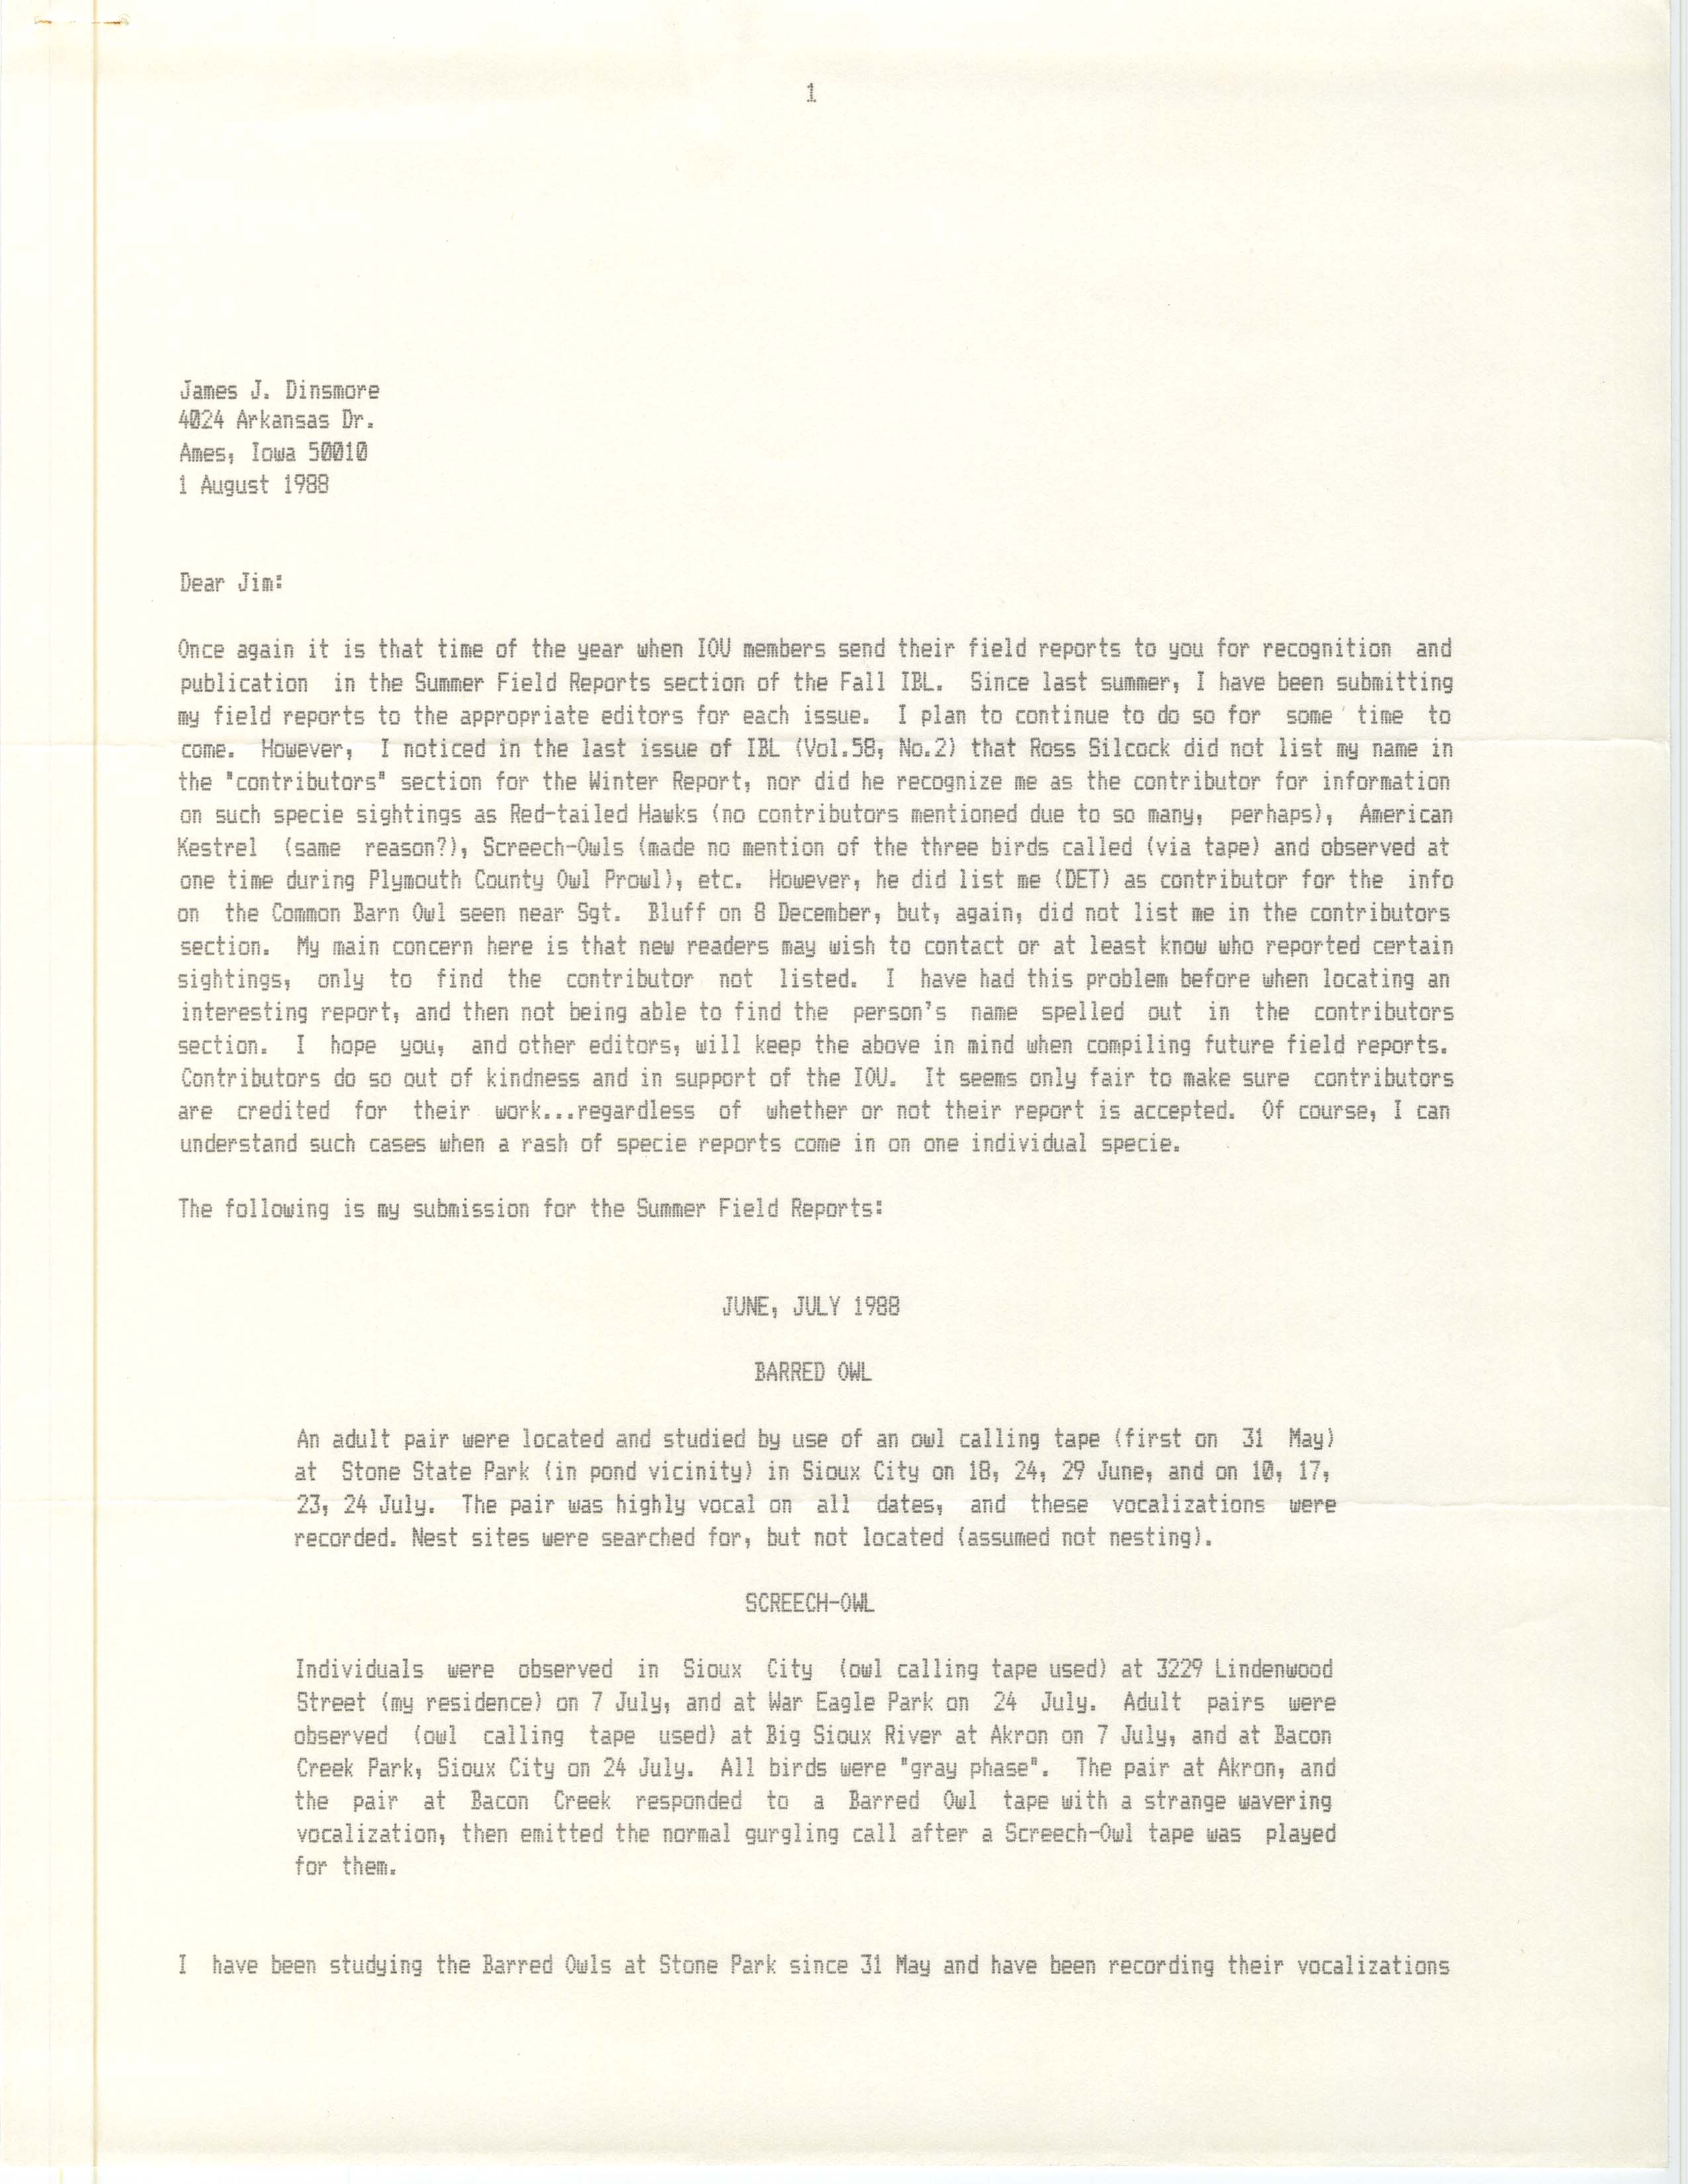 Douglas E. Trapp letter to James J. Dinsmore regarding two owl species sightings, August 1, 1988